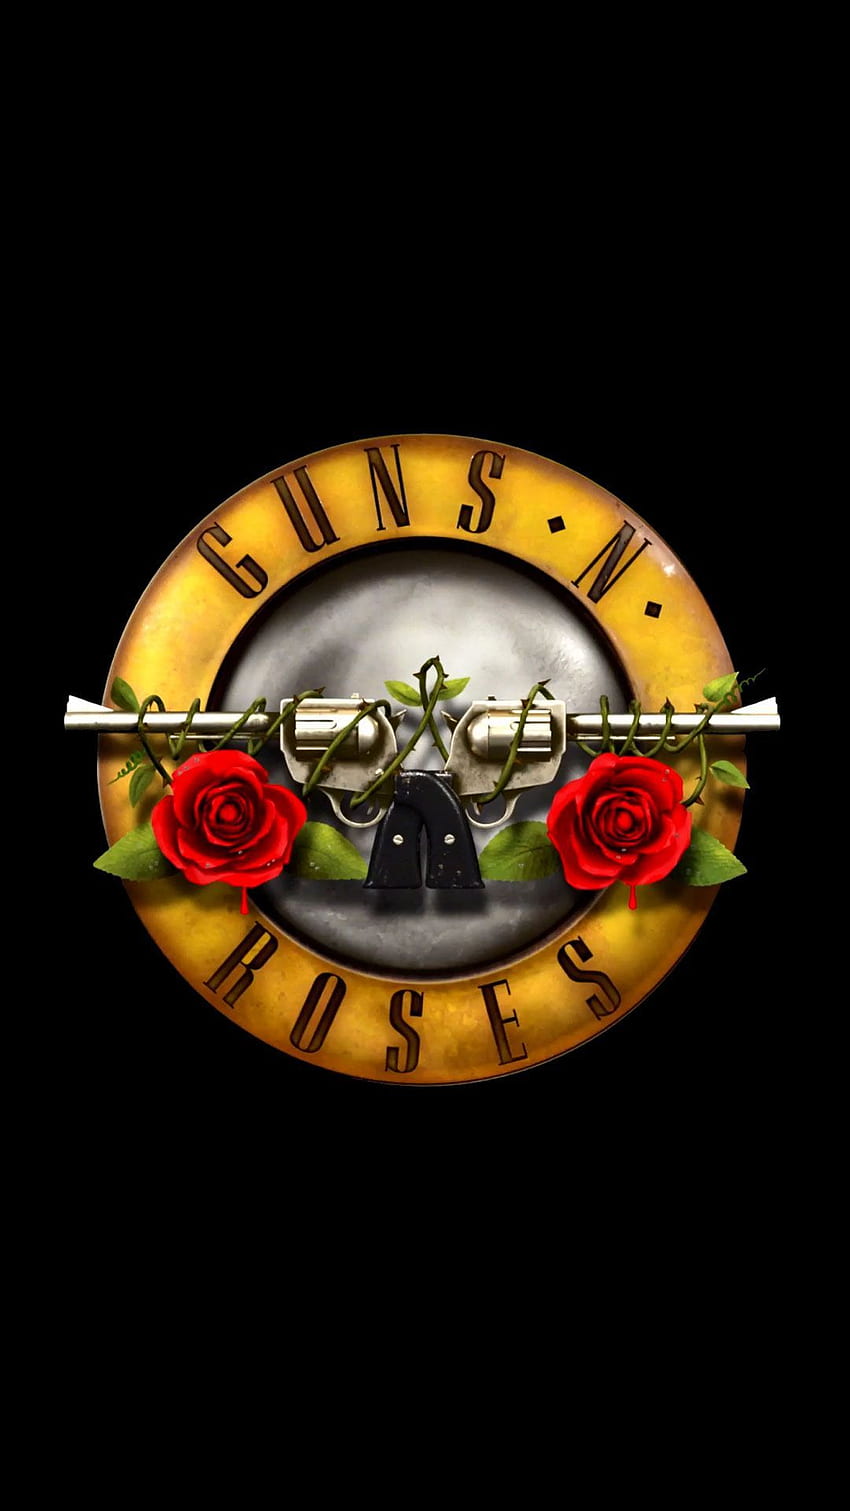 GnR Wallpaper - Guns N' Roses Wallpaper (16665332) - Fanpop